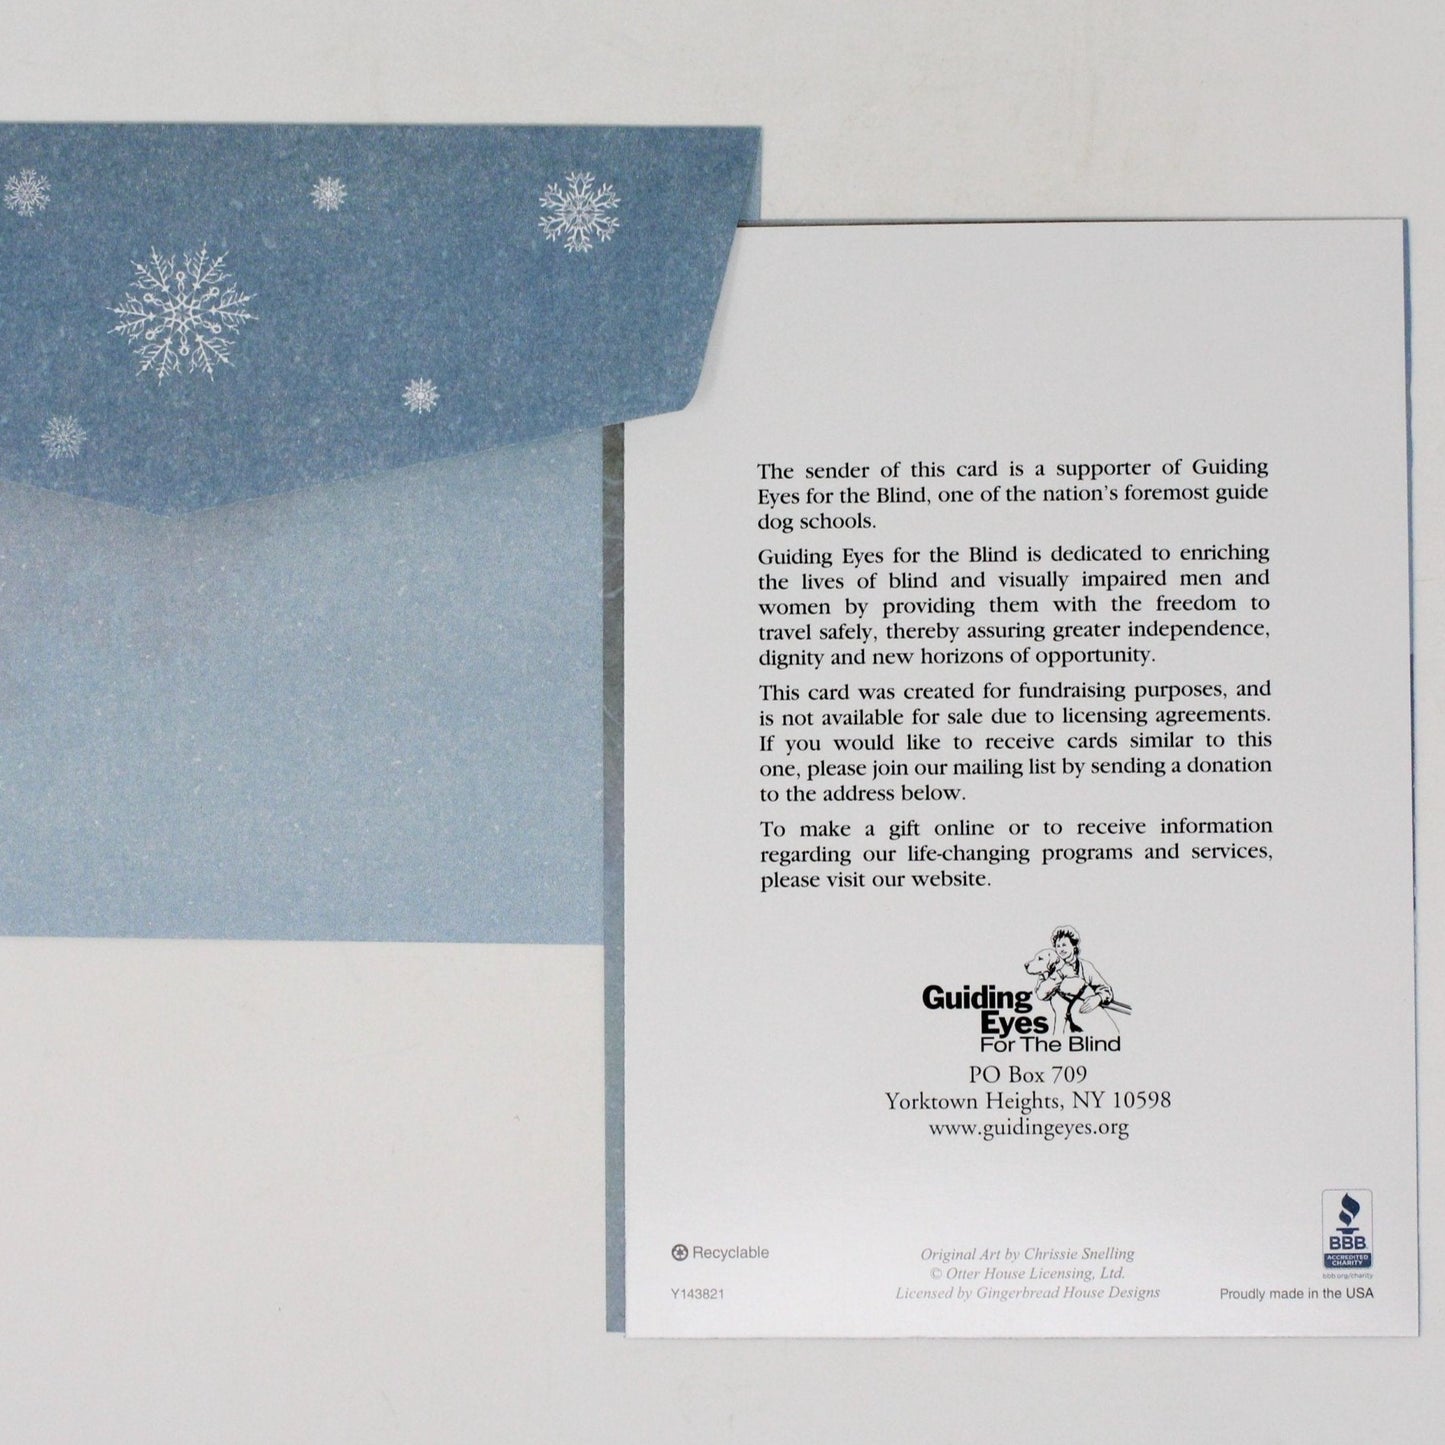 Greeting Card / Christmas, Puppies & Snowman, Unused, Vintage